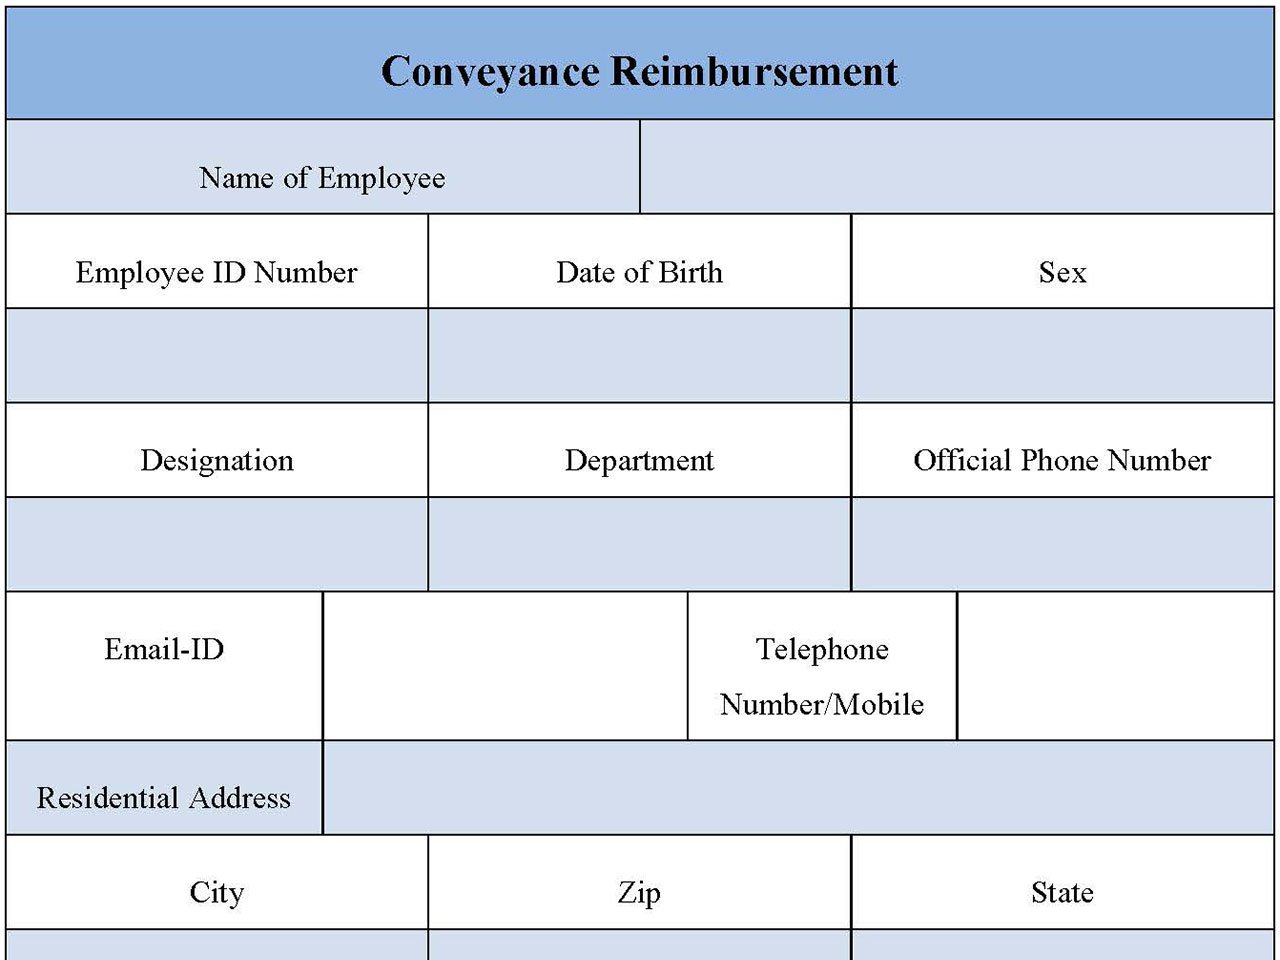 Conveyance Reimbursement Form